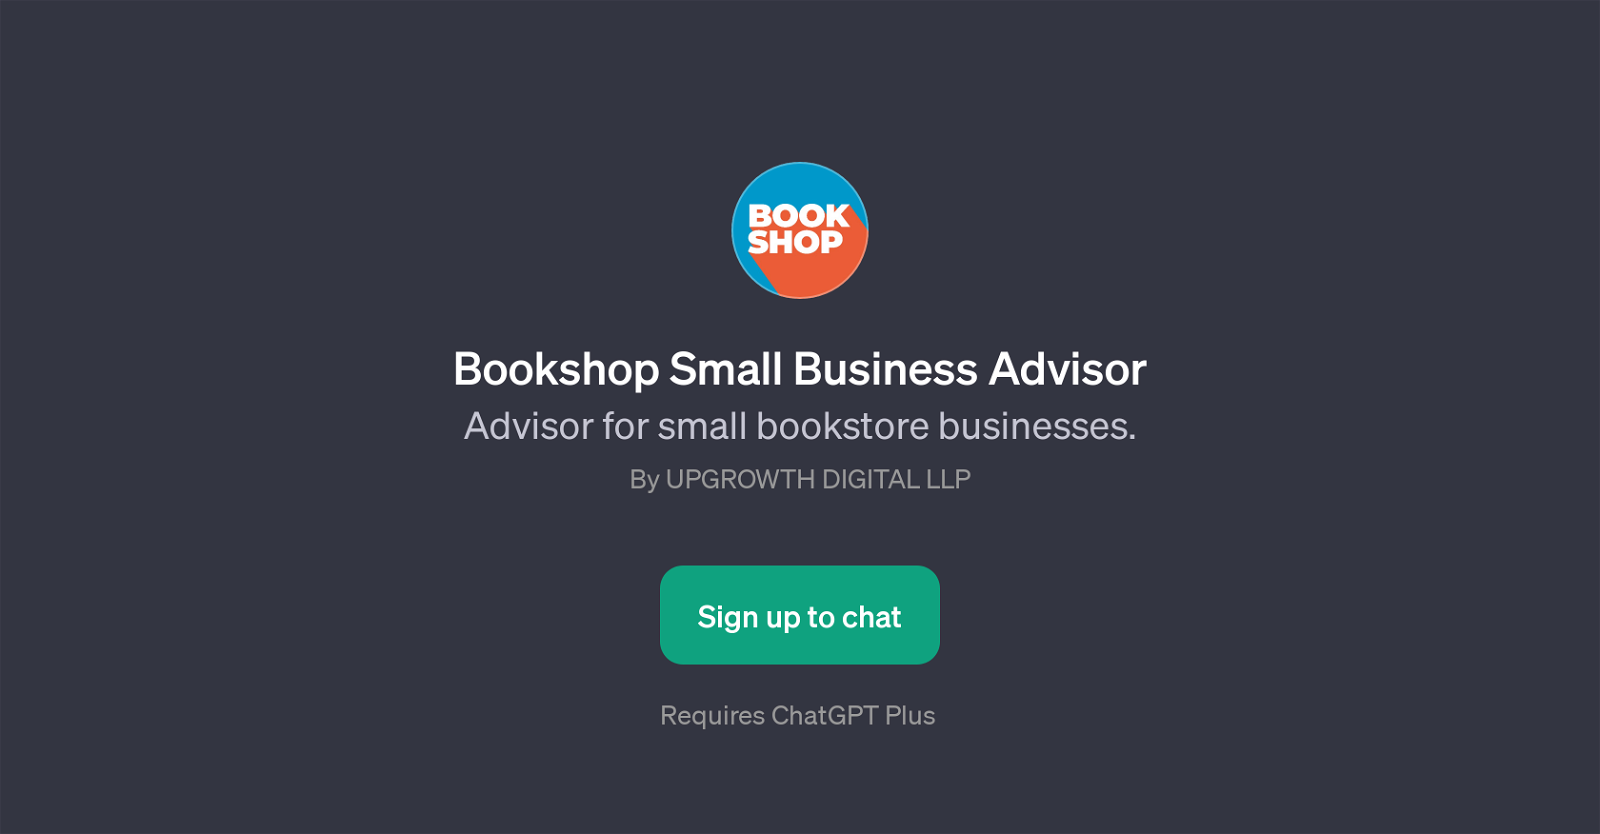 Bookshop Small Business Advisor website